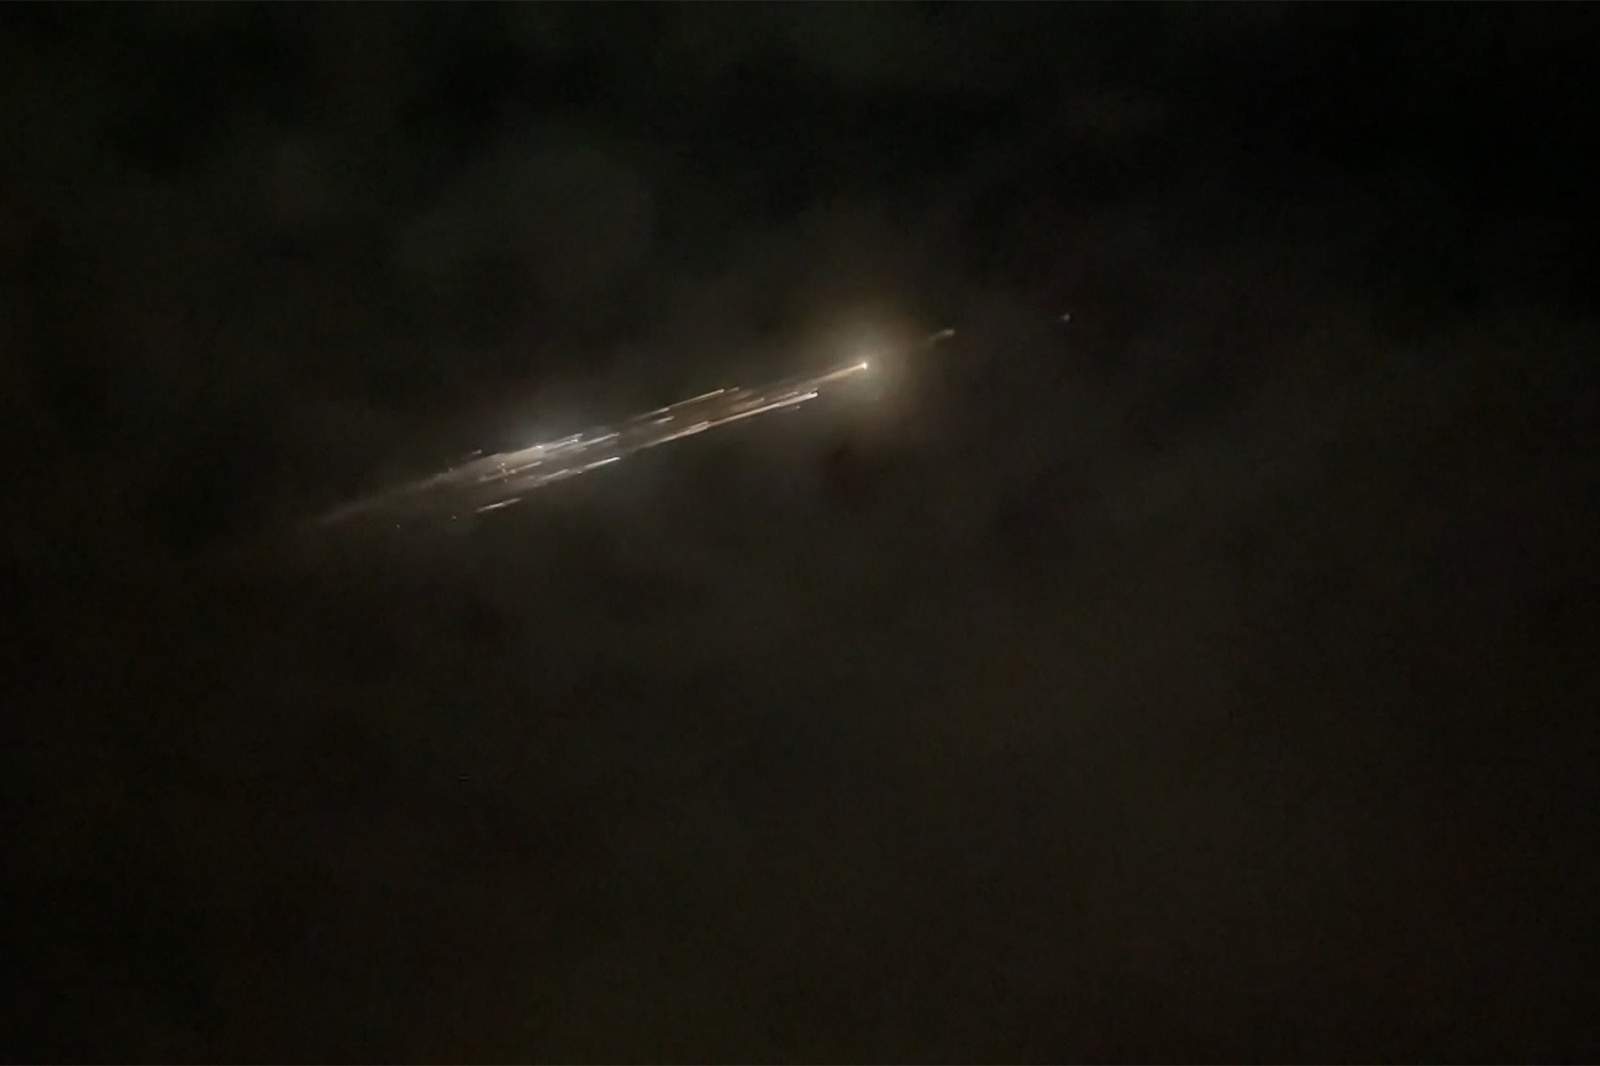 Rocket debris lights up skies over the Pacific Northwest